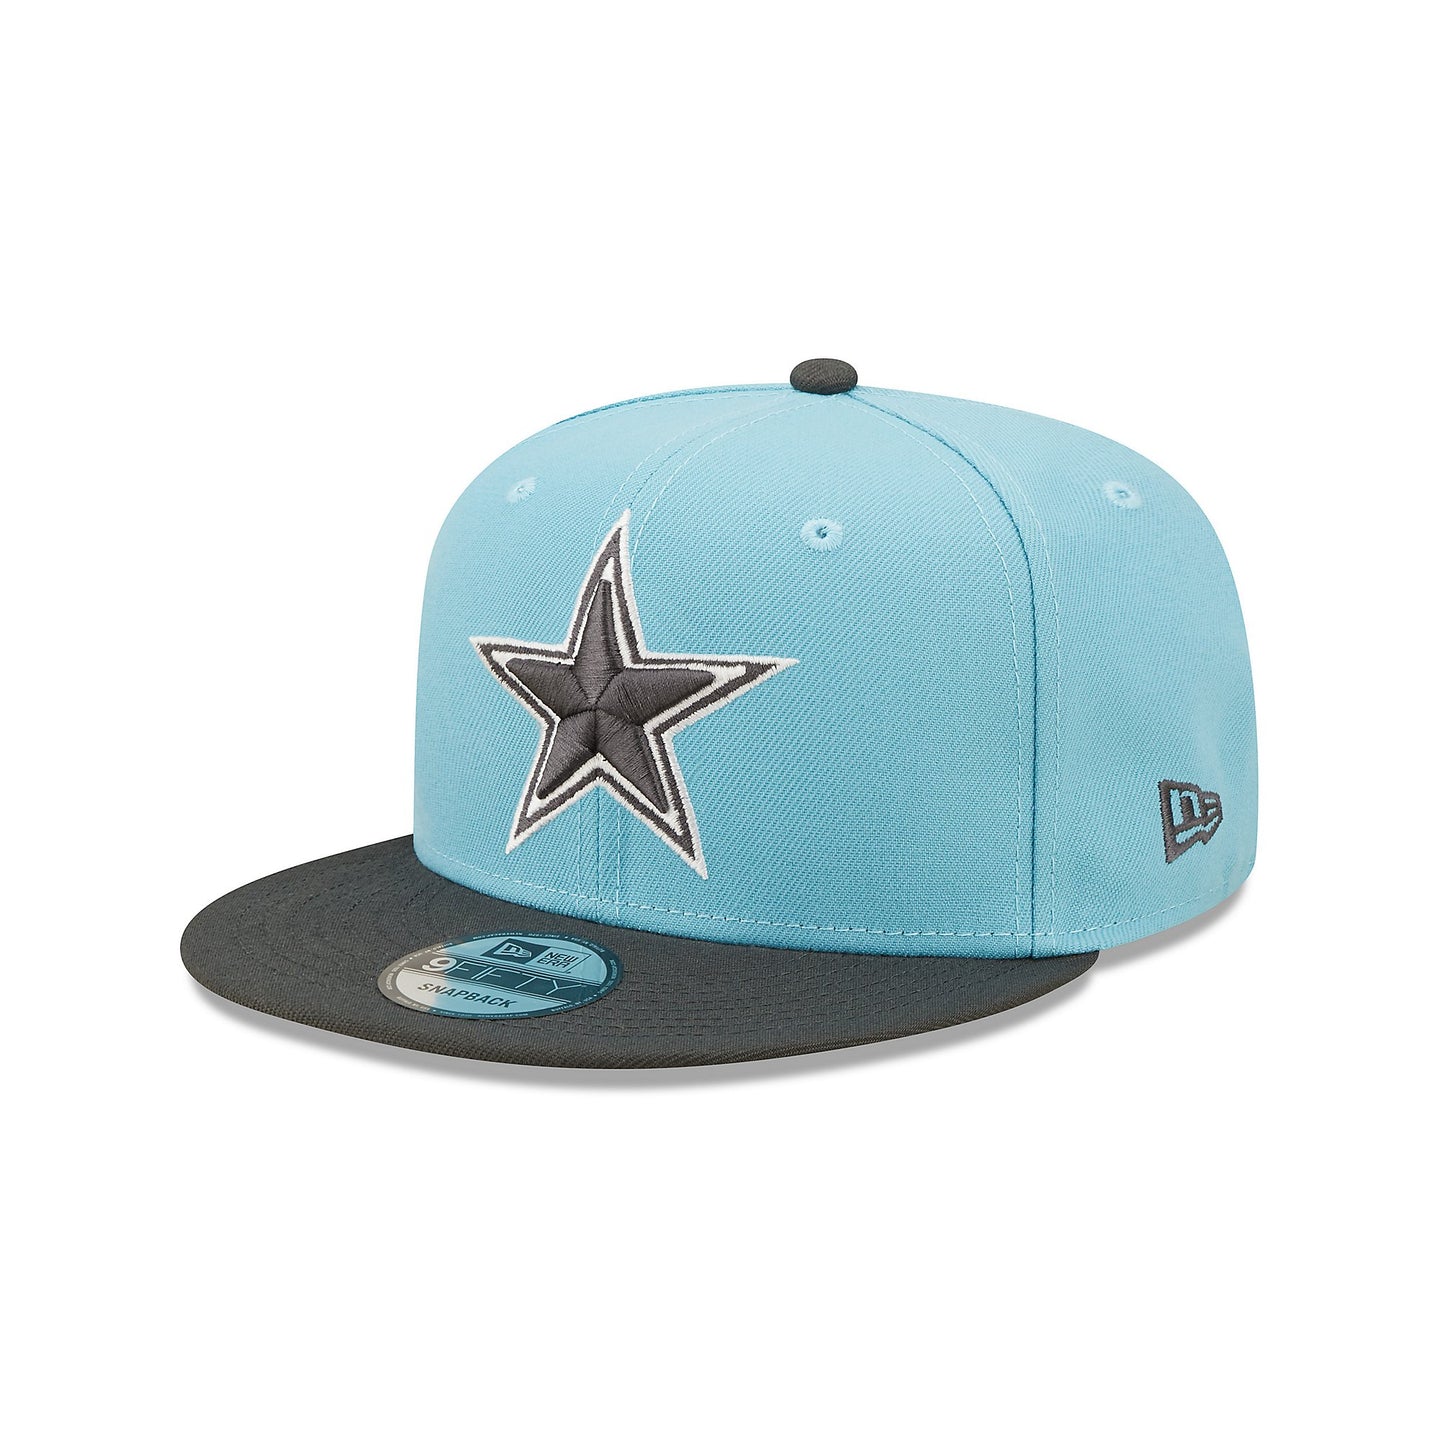 Dallas Cowboys New Era 9Fifty Blue Foam Steel Clouds Snapback Hat